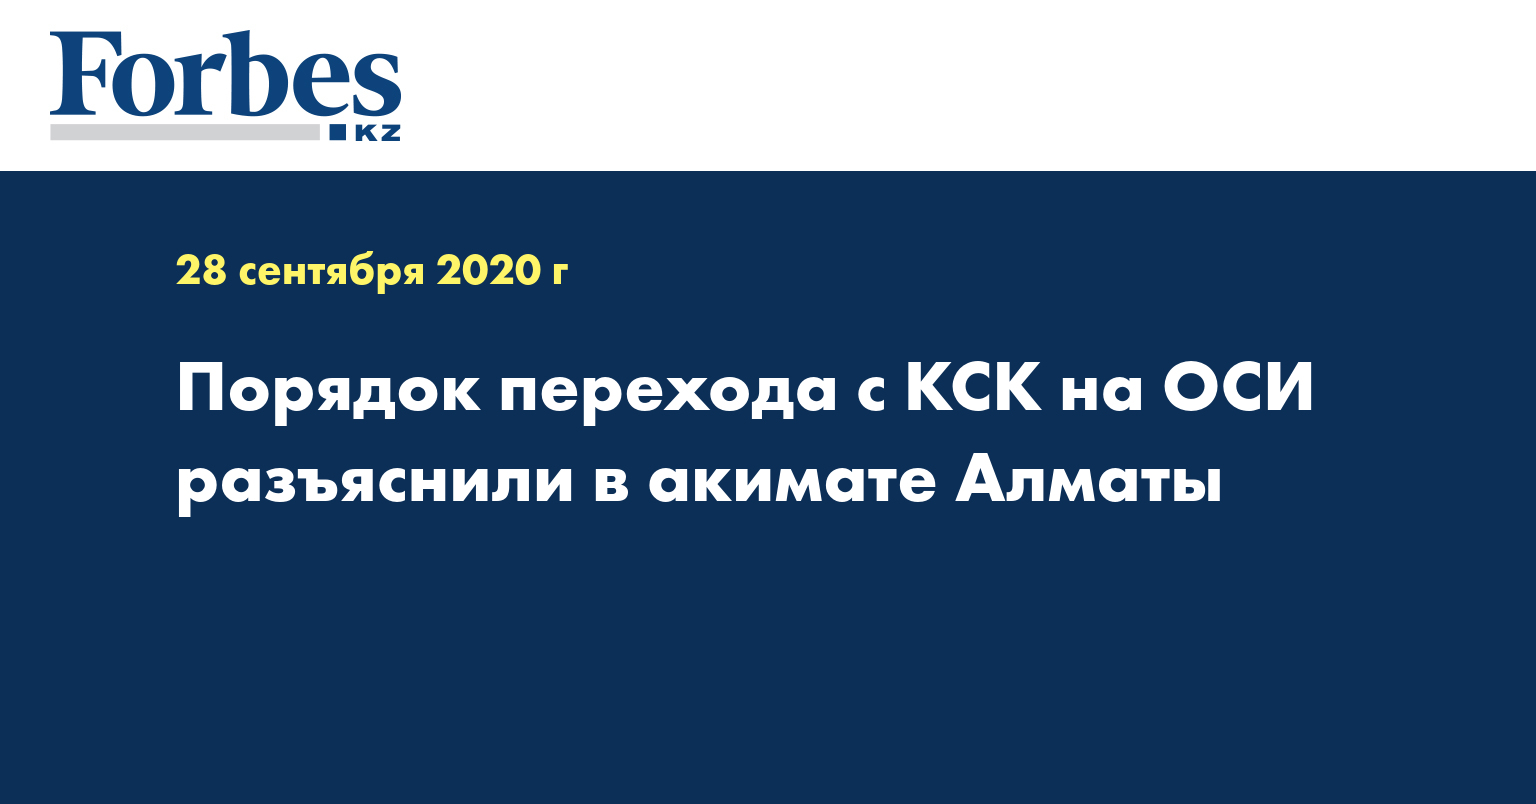 Порядок перехода с КСК на ОСИ разъяснили в акимате Алматы